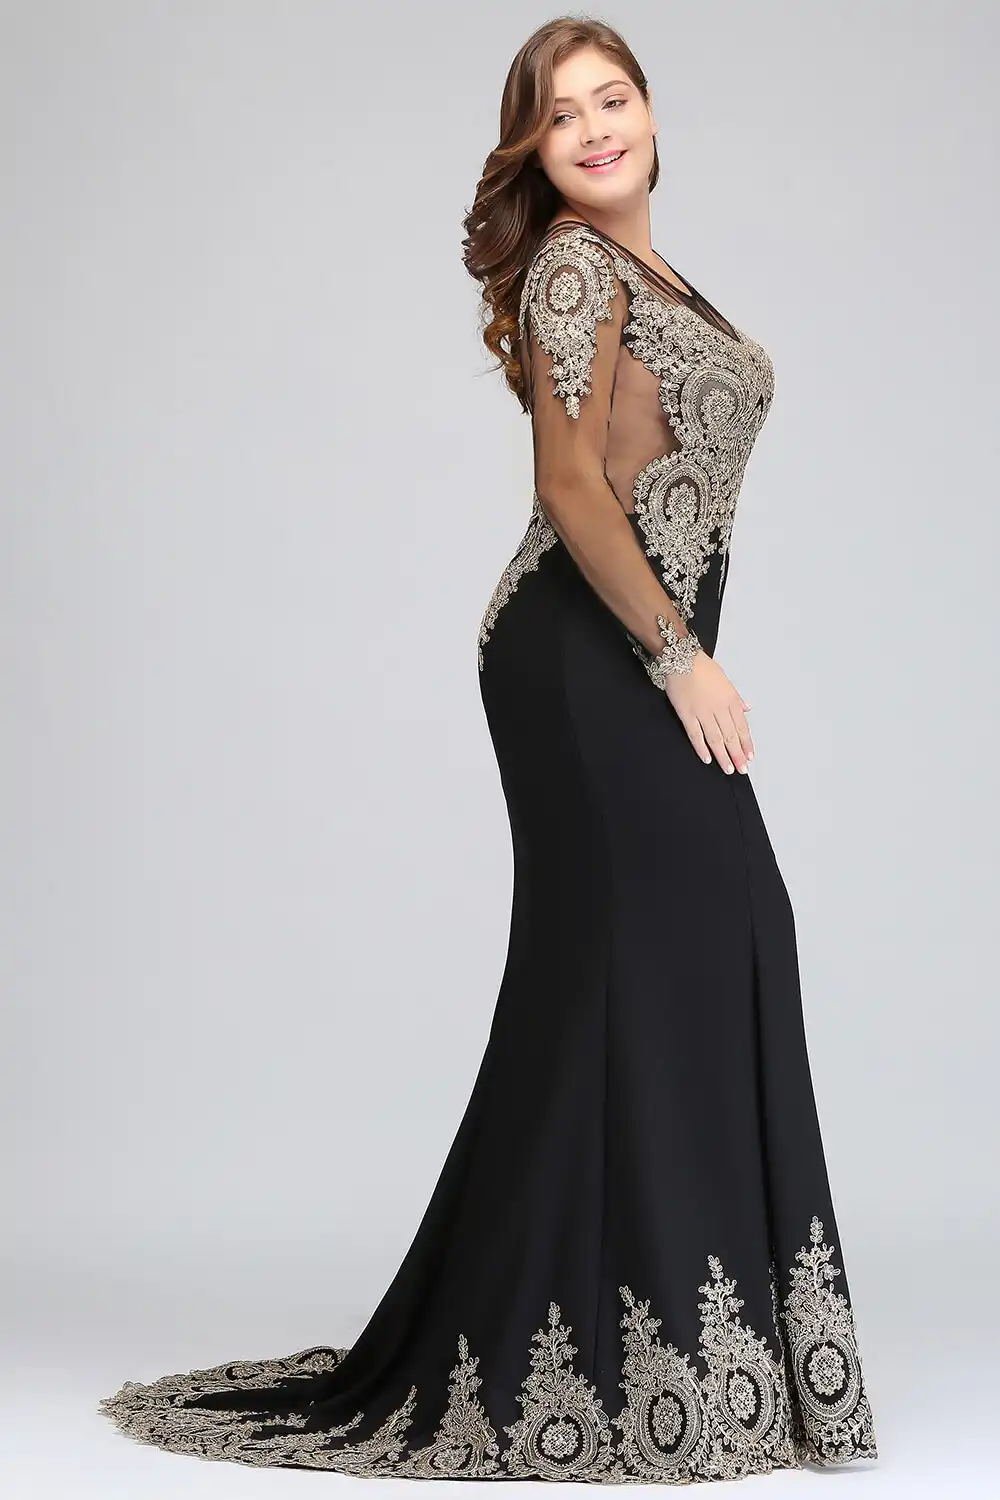 size 26w formal dresses